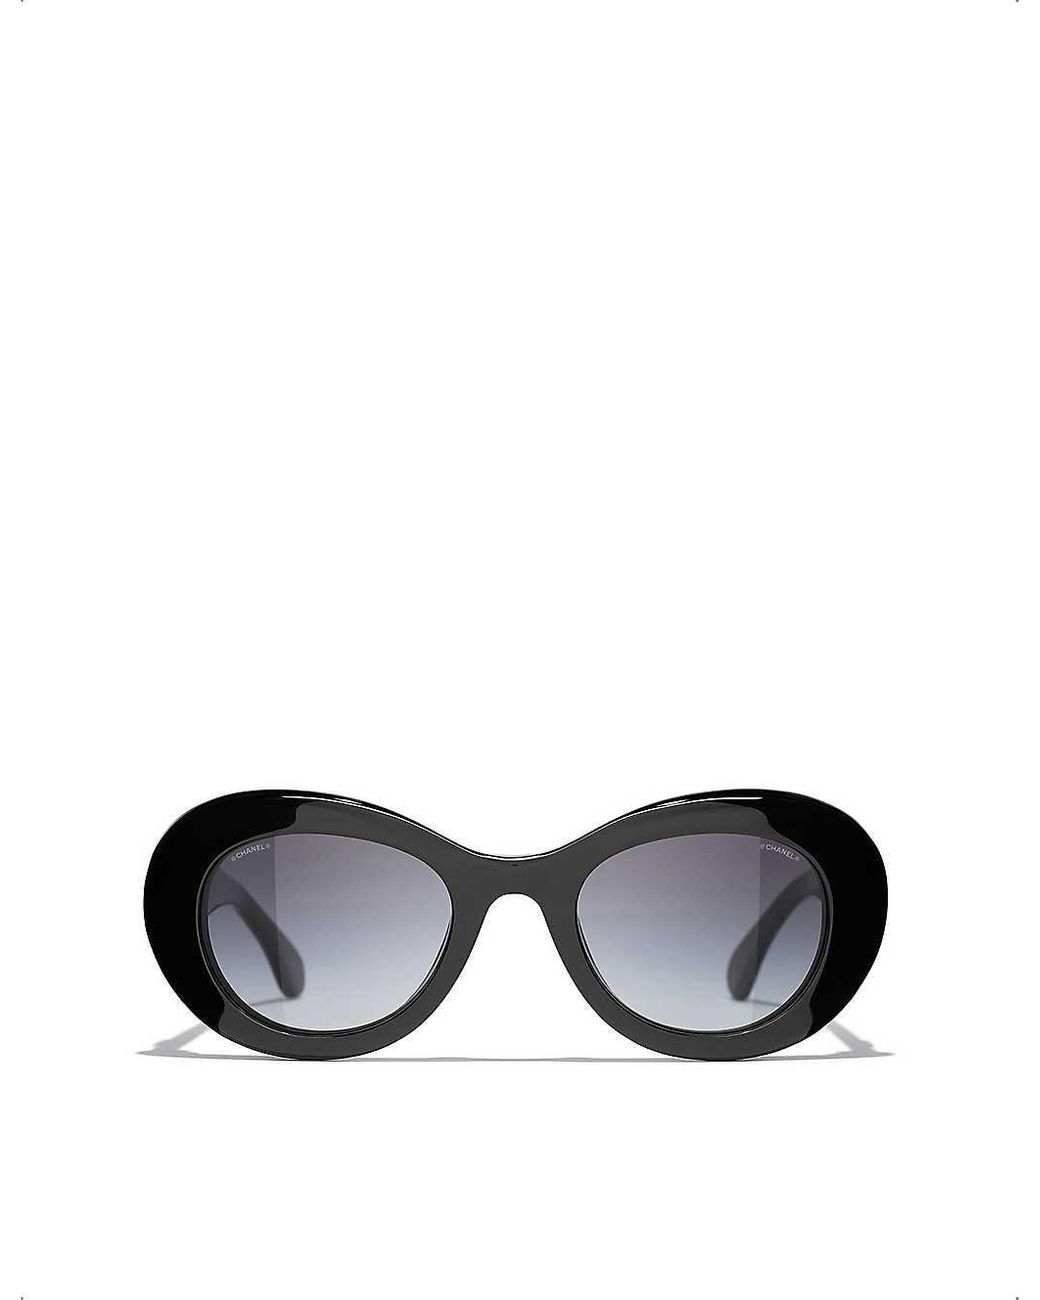 Chanel Oval Sunglasses in Black